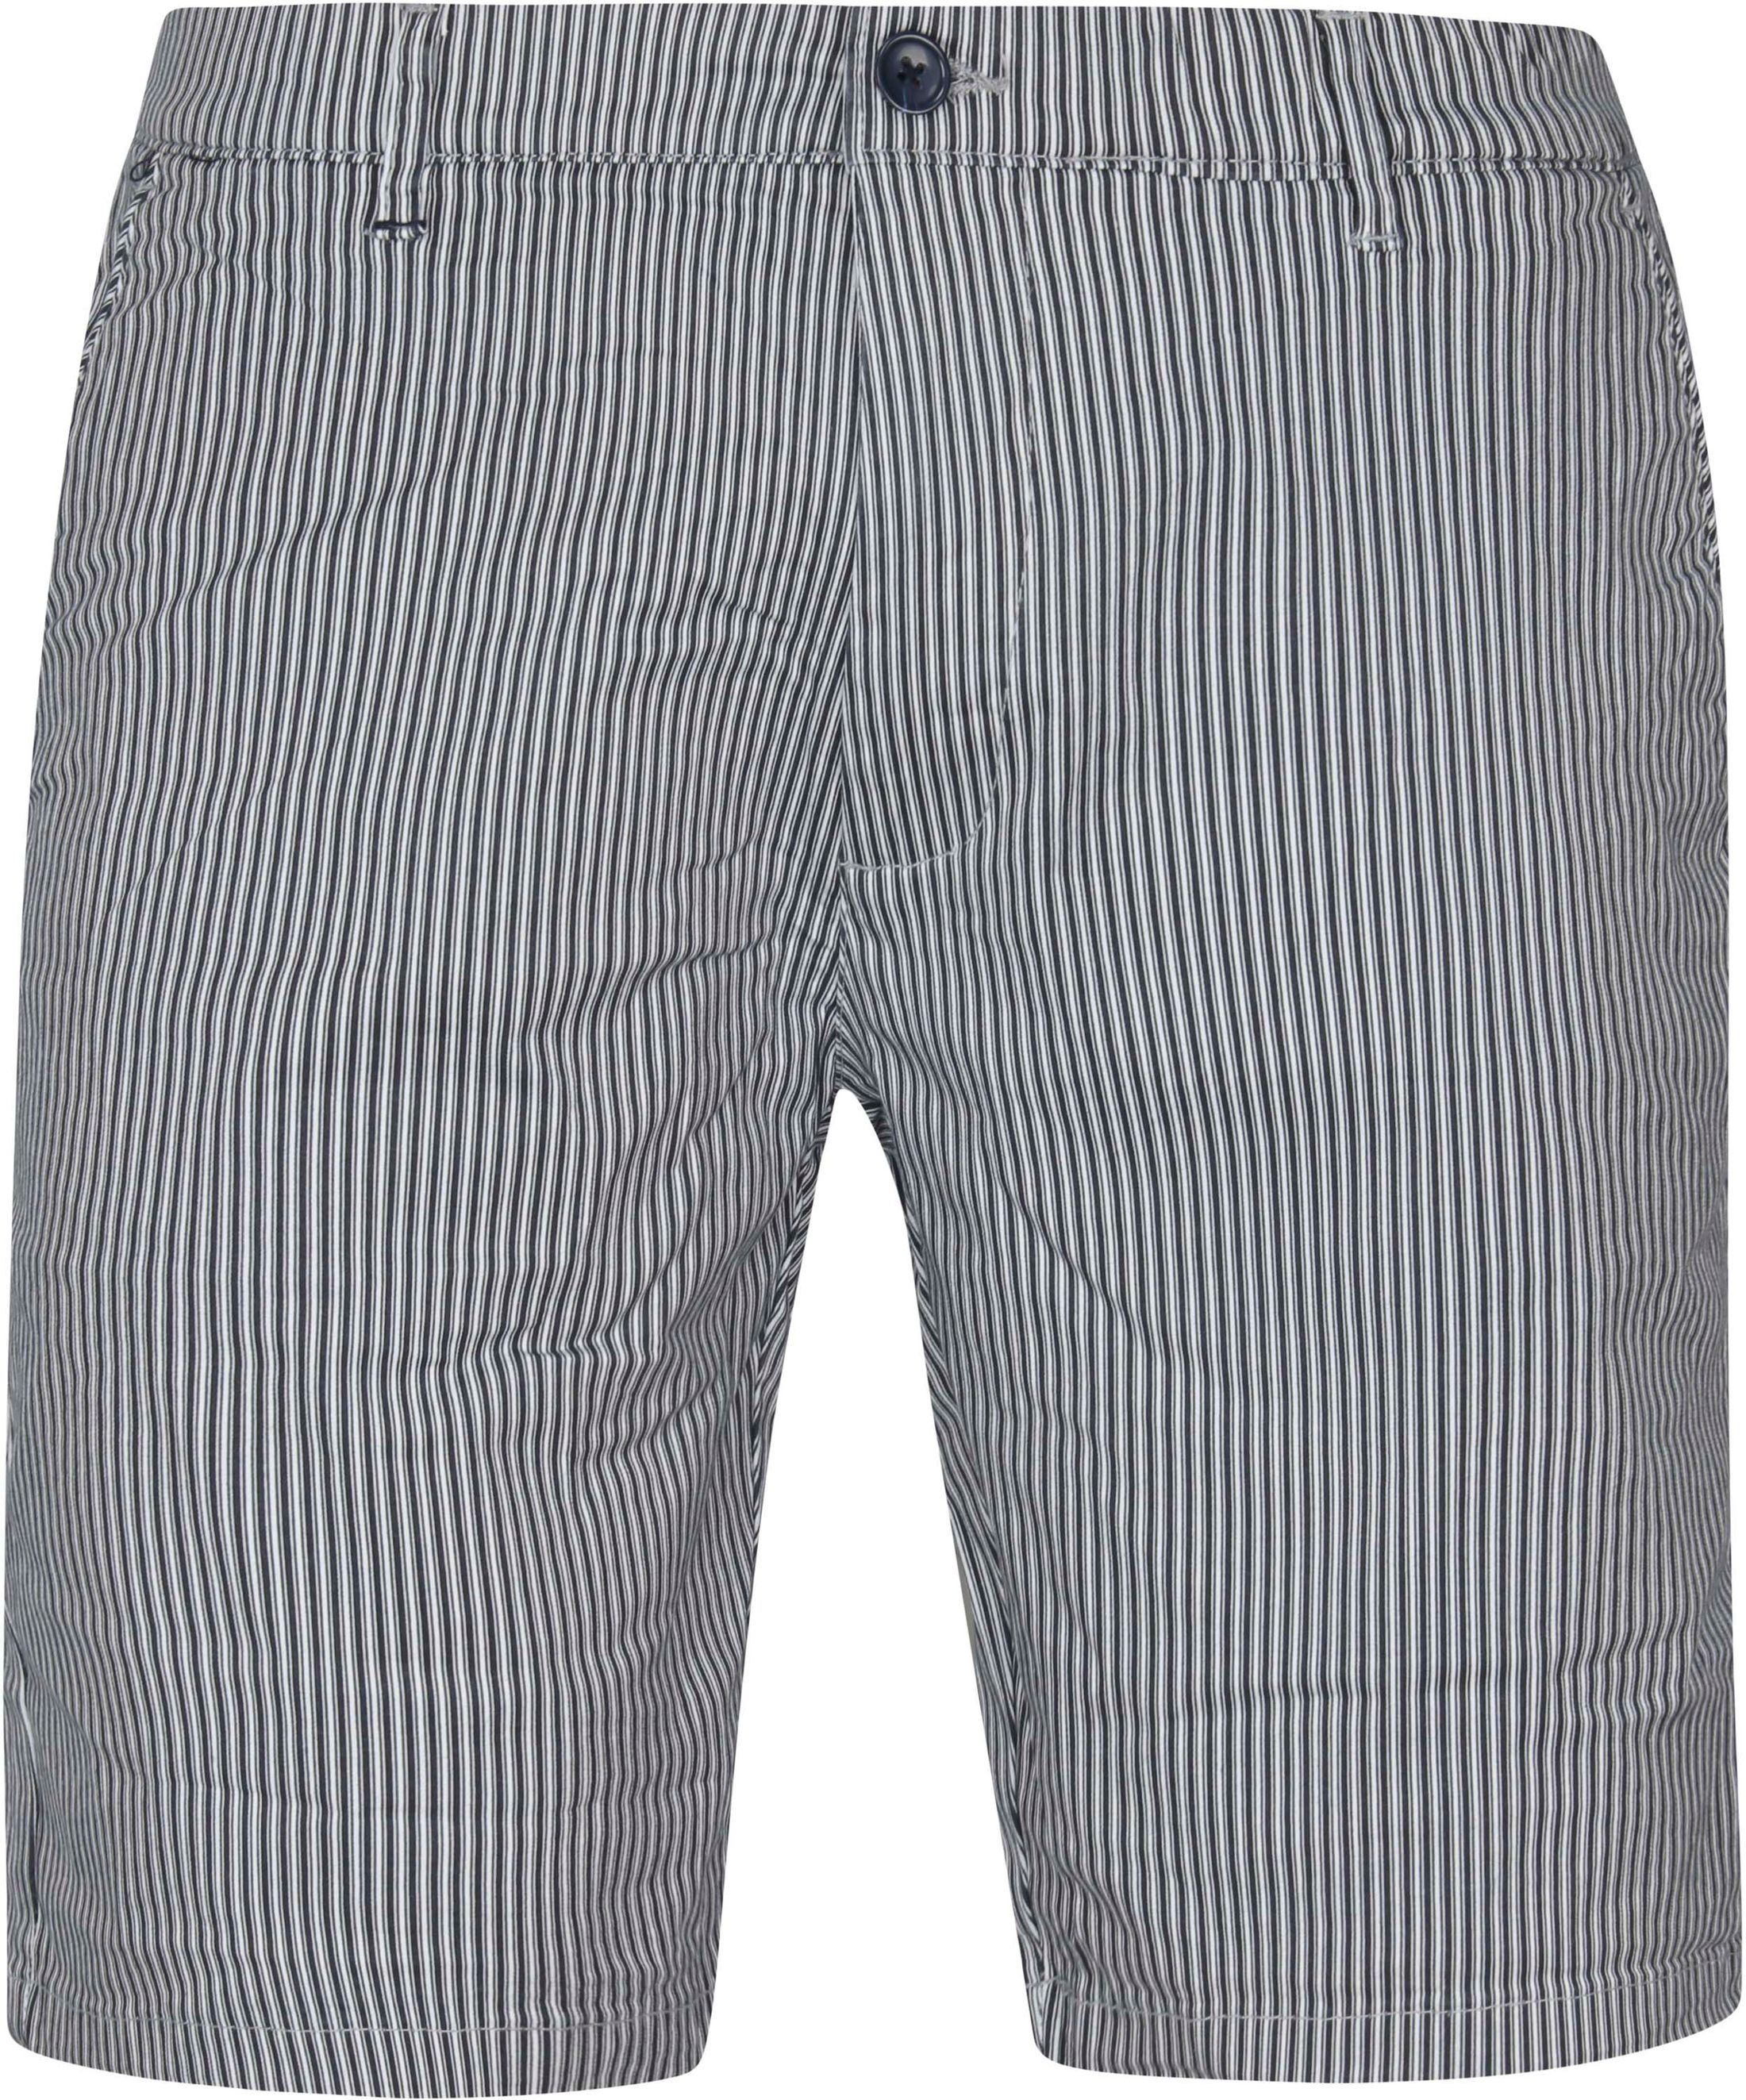 Dstrezzed Charlie Chino Shorts Stripes Dark Blue Dark Blue size 31